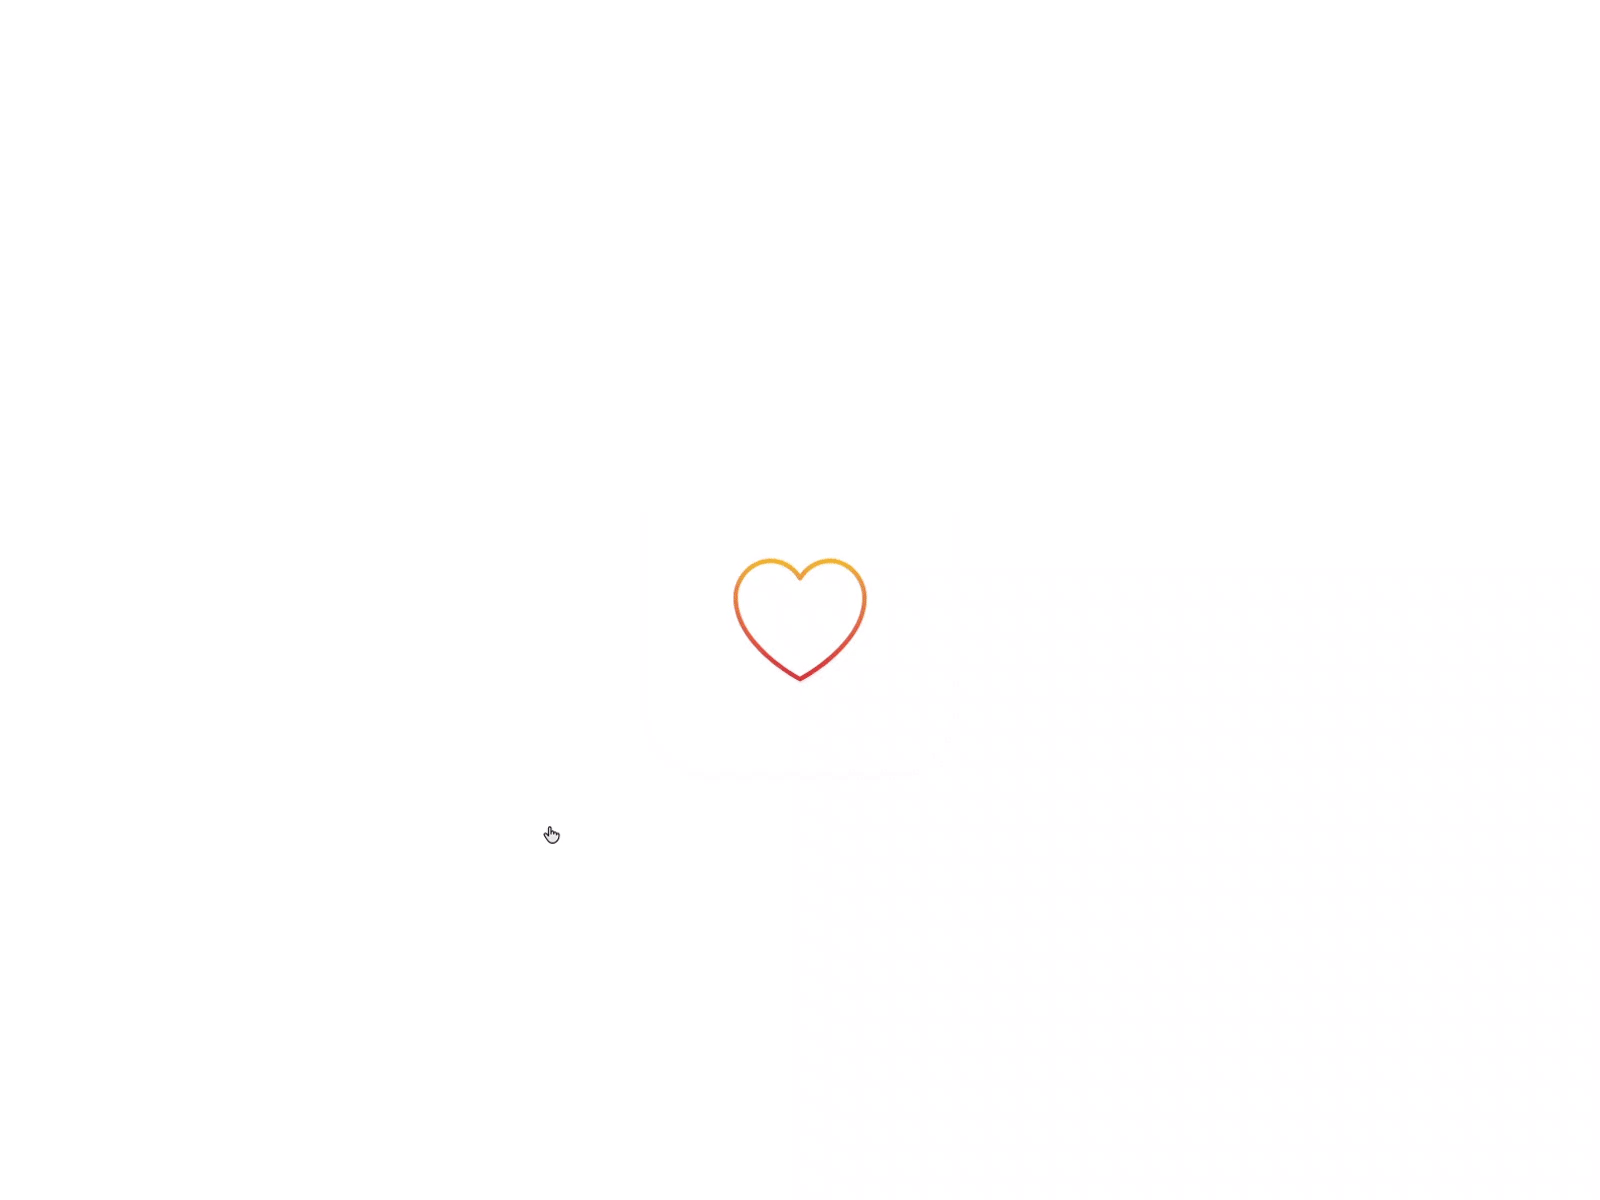 Heart Like button animation